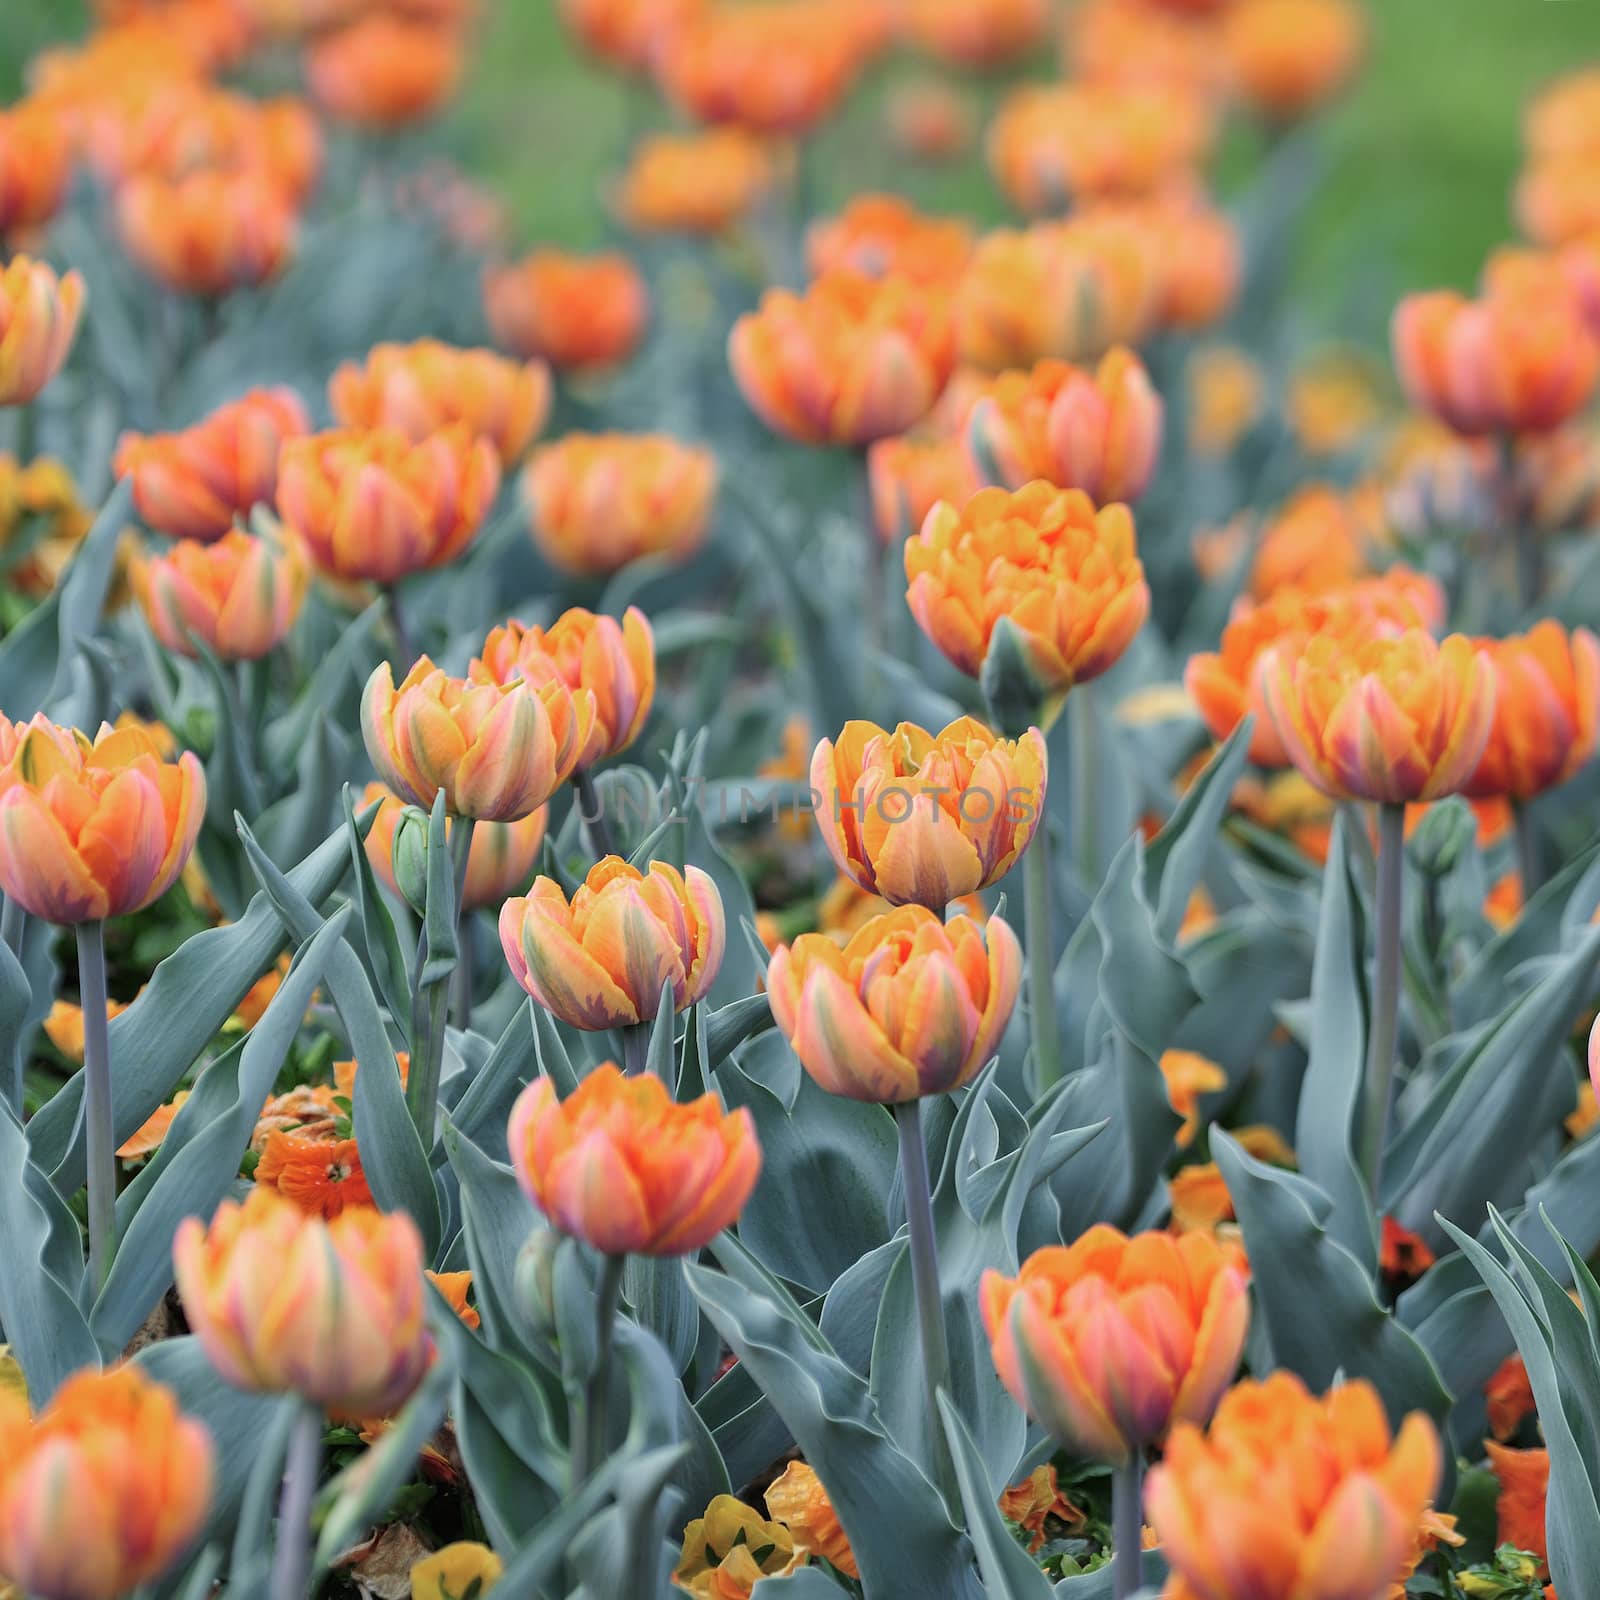 'Orange Princess' tulip by Severas